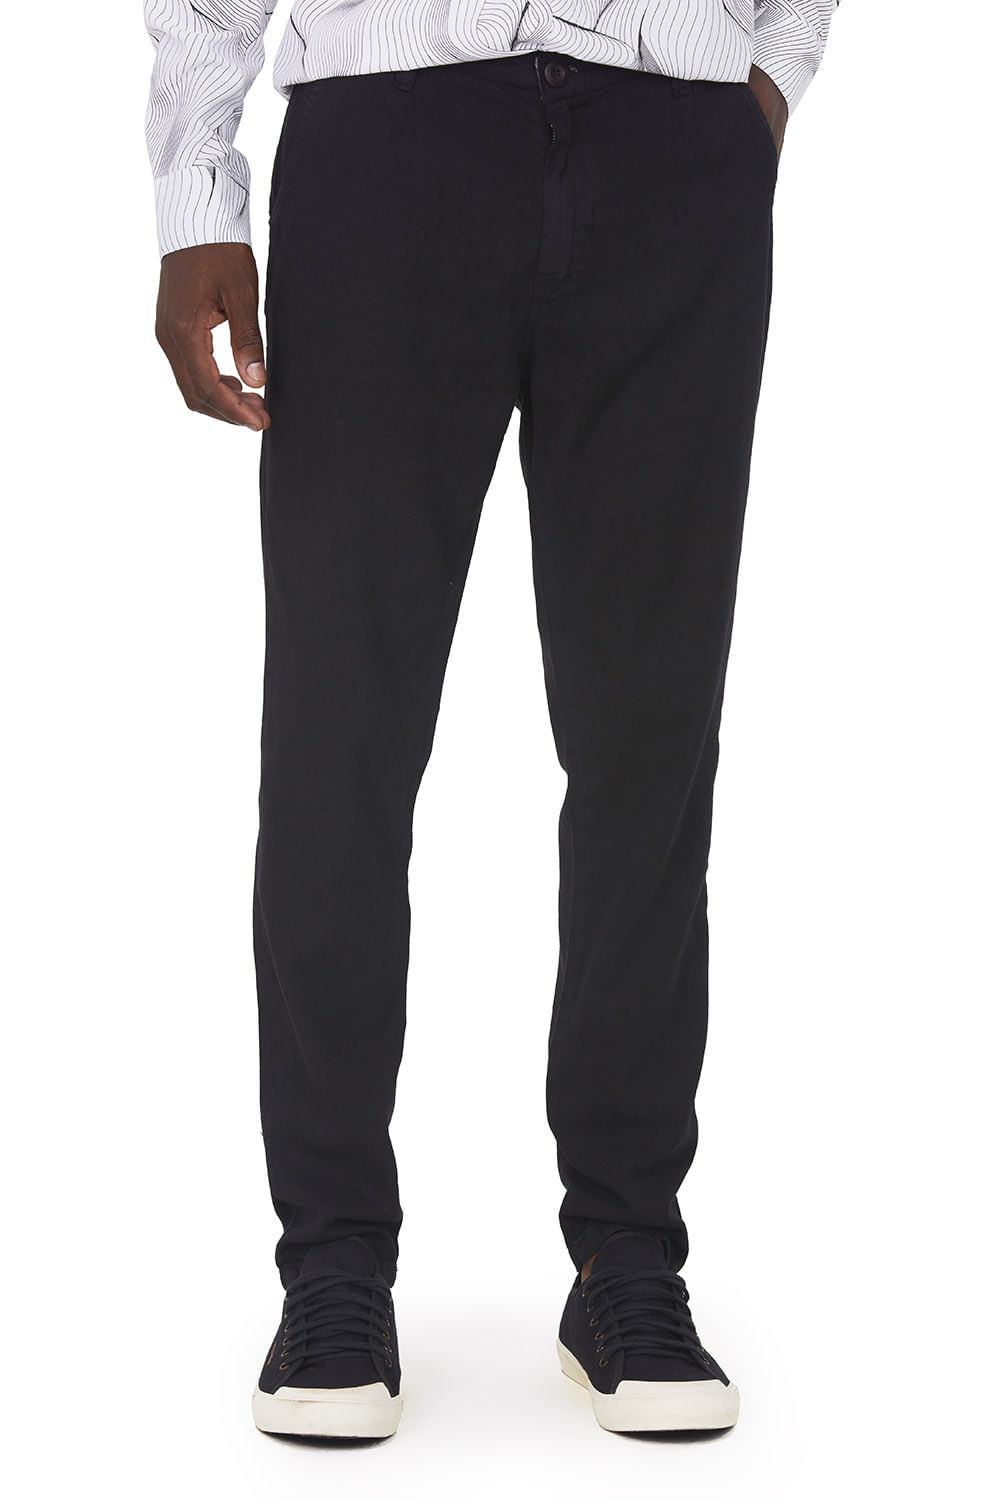 Calça Masculina Jeans Jogger Drift Black Polo Wear - Polo Wear